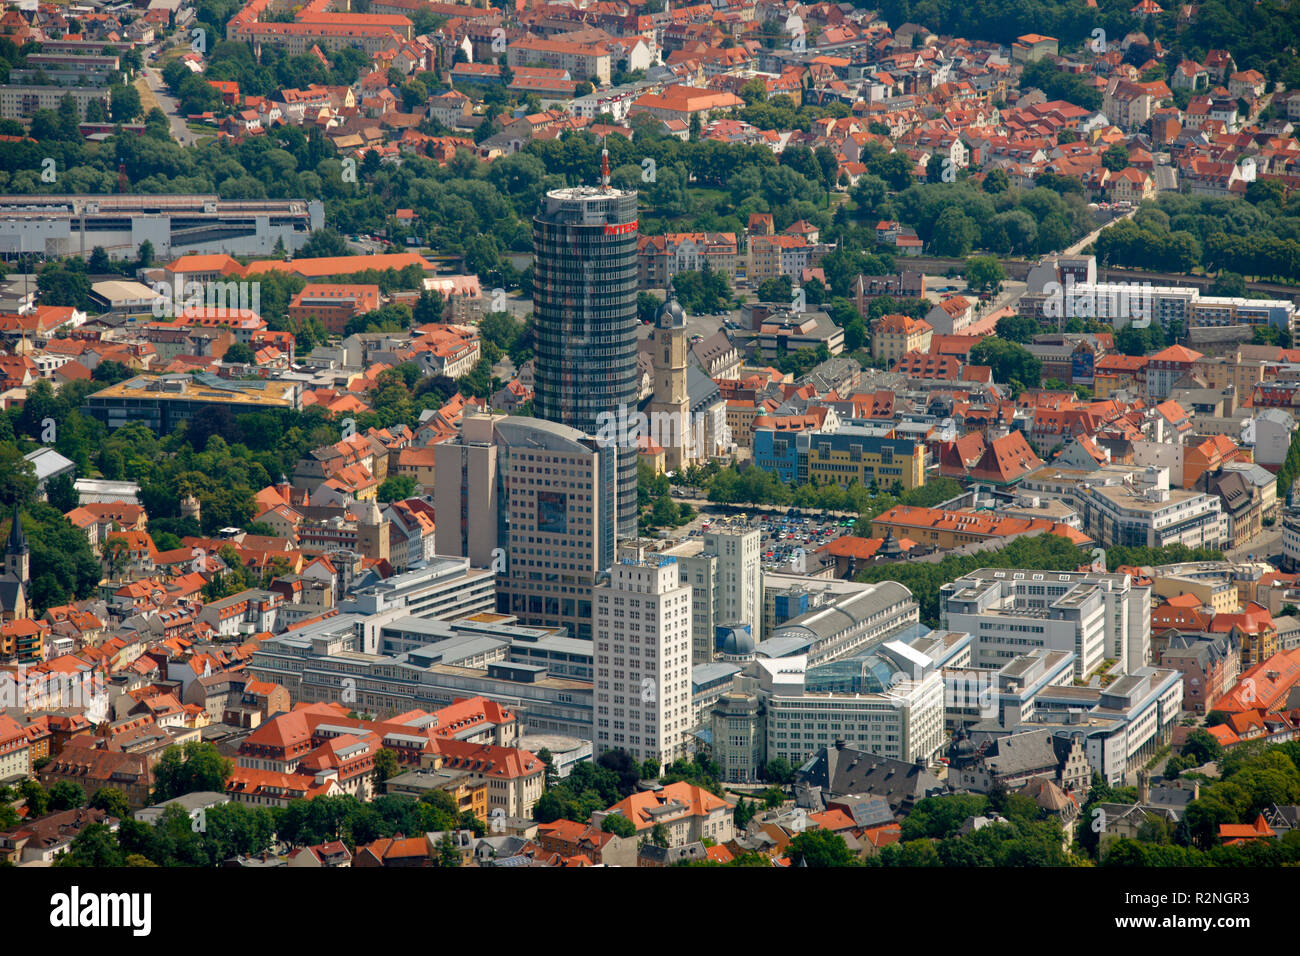 Aerial view, Jentower, Jenoptik, city center, University of Jena, aerial view, Jena, Thuringia, Germany, Europe, Stock Photo